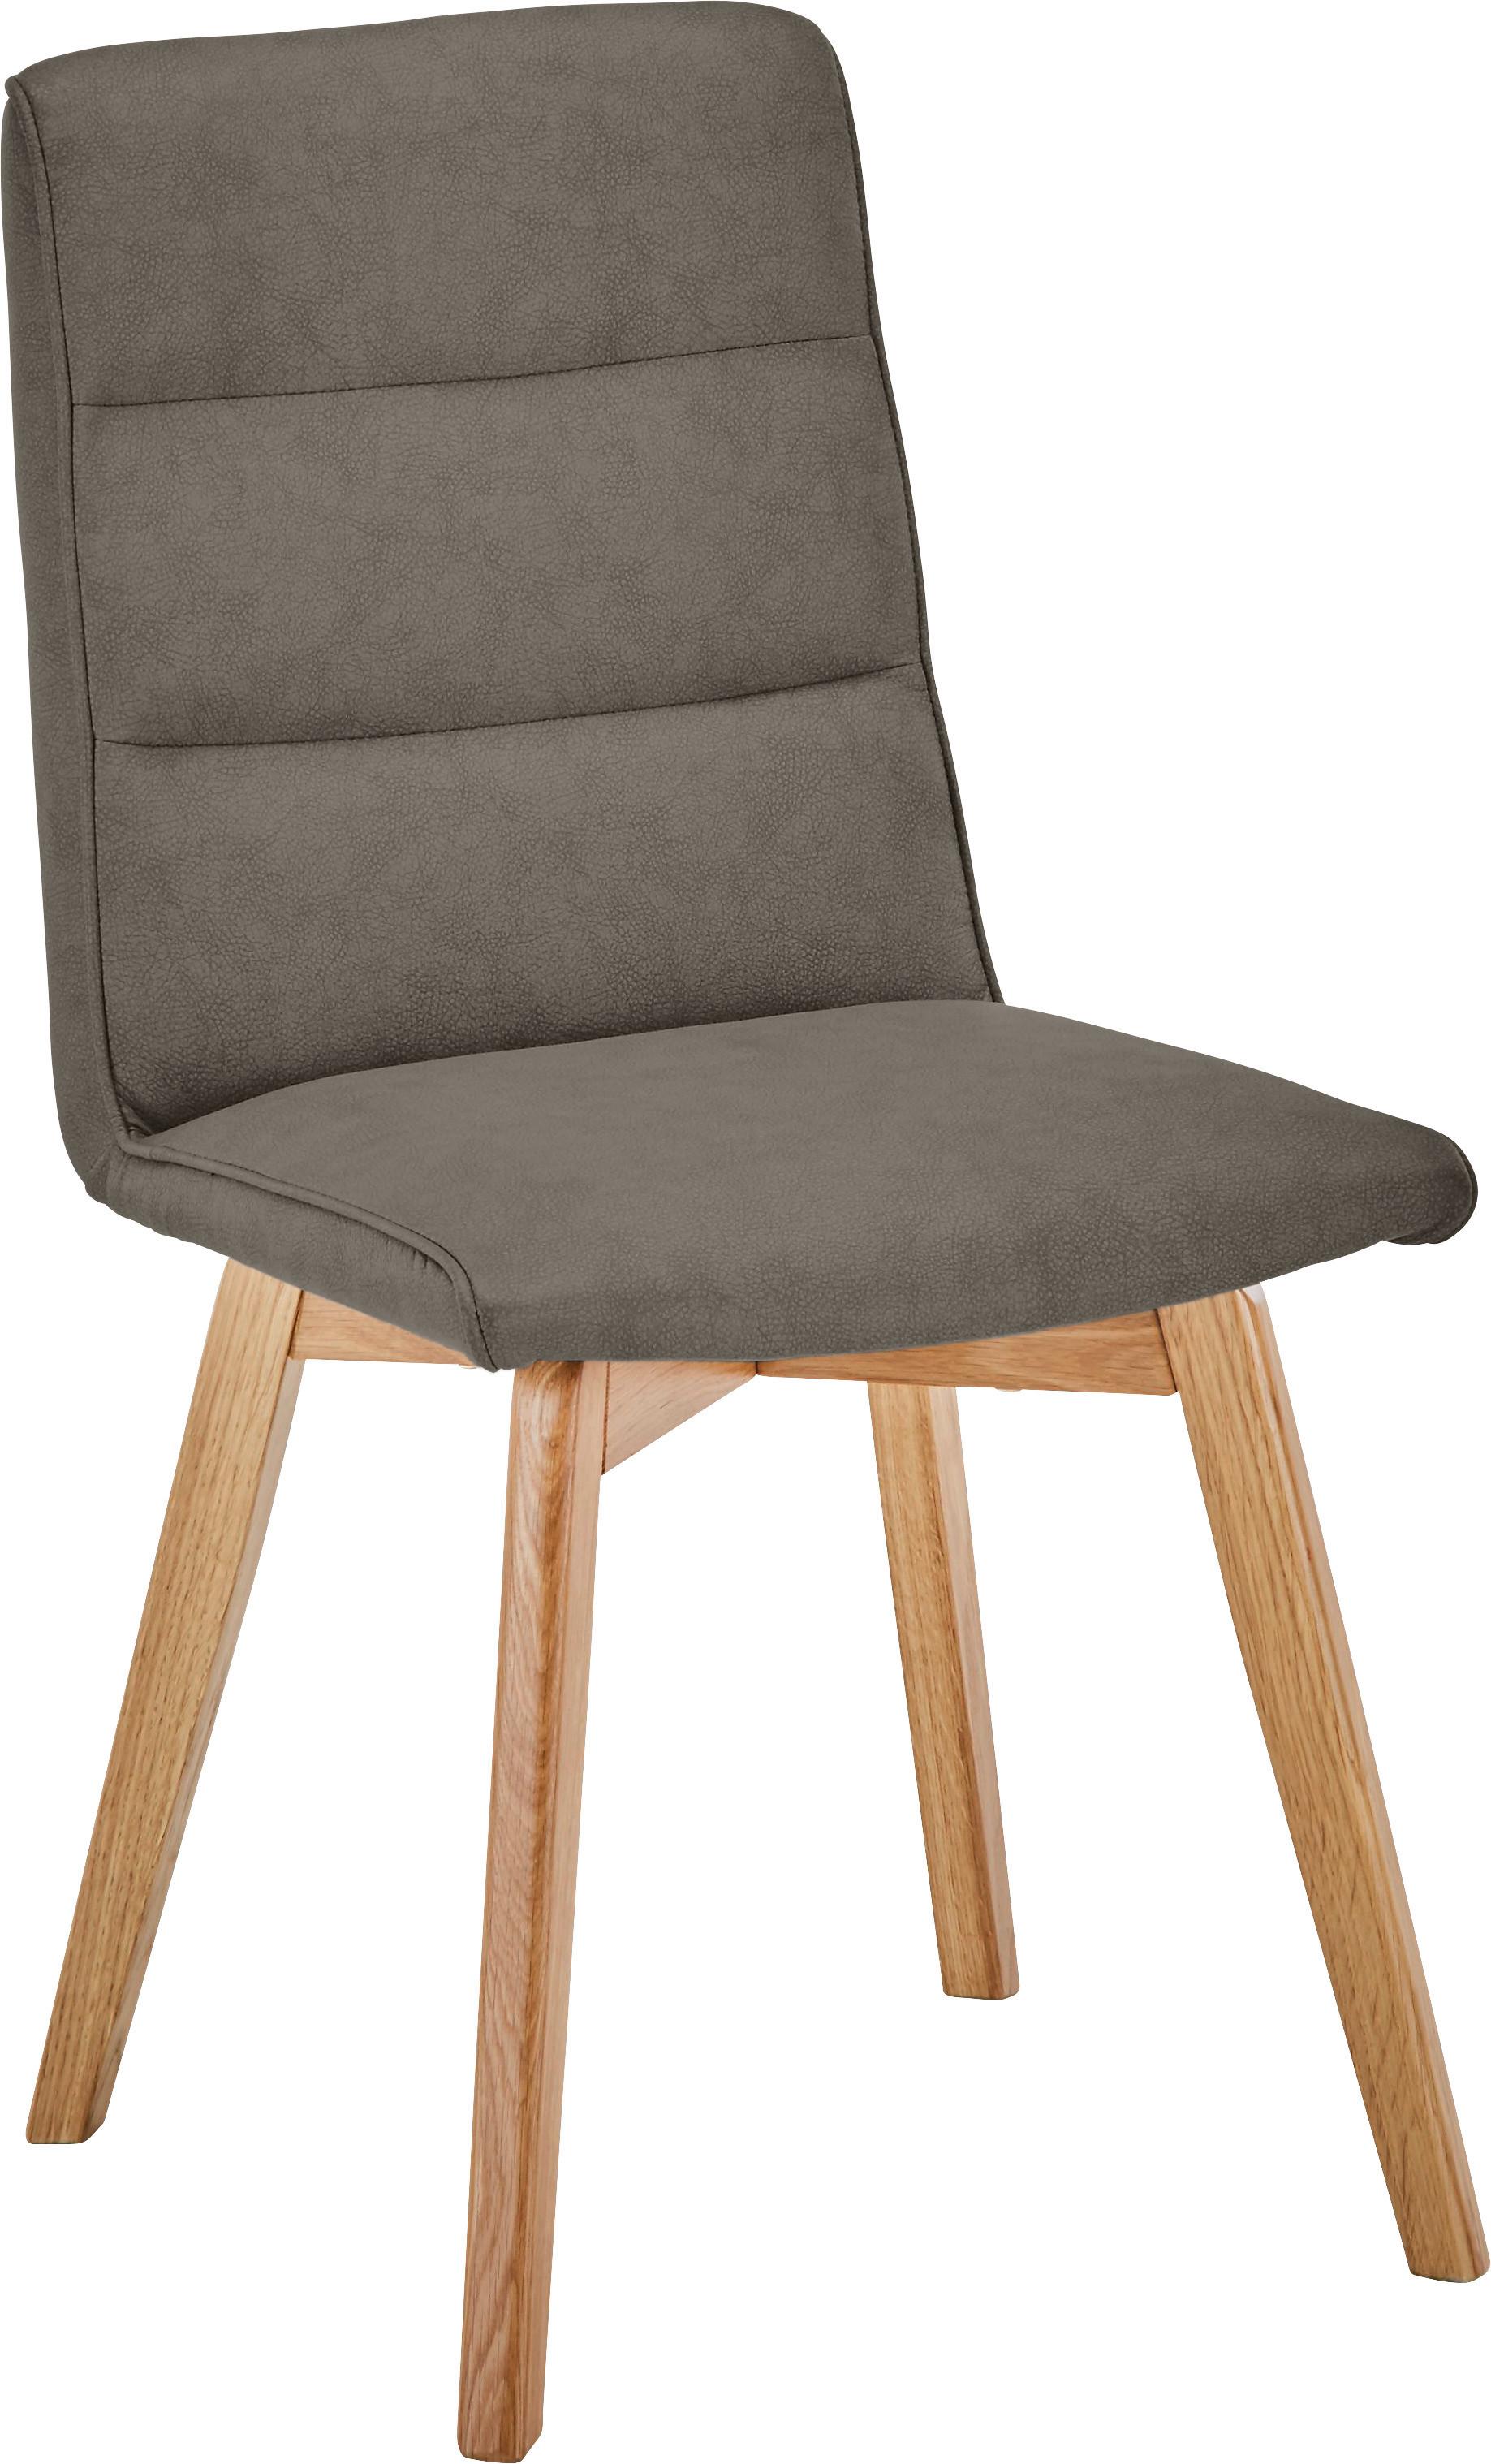 Stolica Ellie - boje hrasta/smeđa, Modern, drvo/tekstil (44/87/55,5cm) - Based